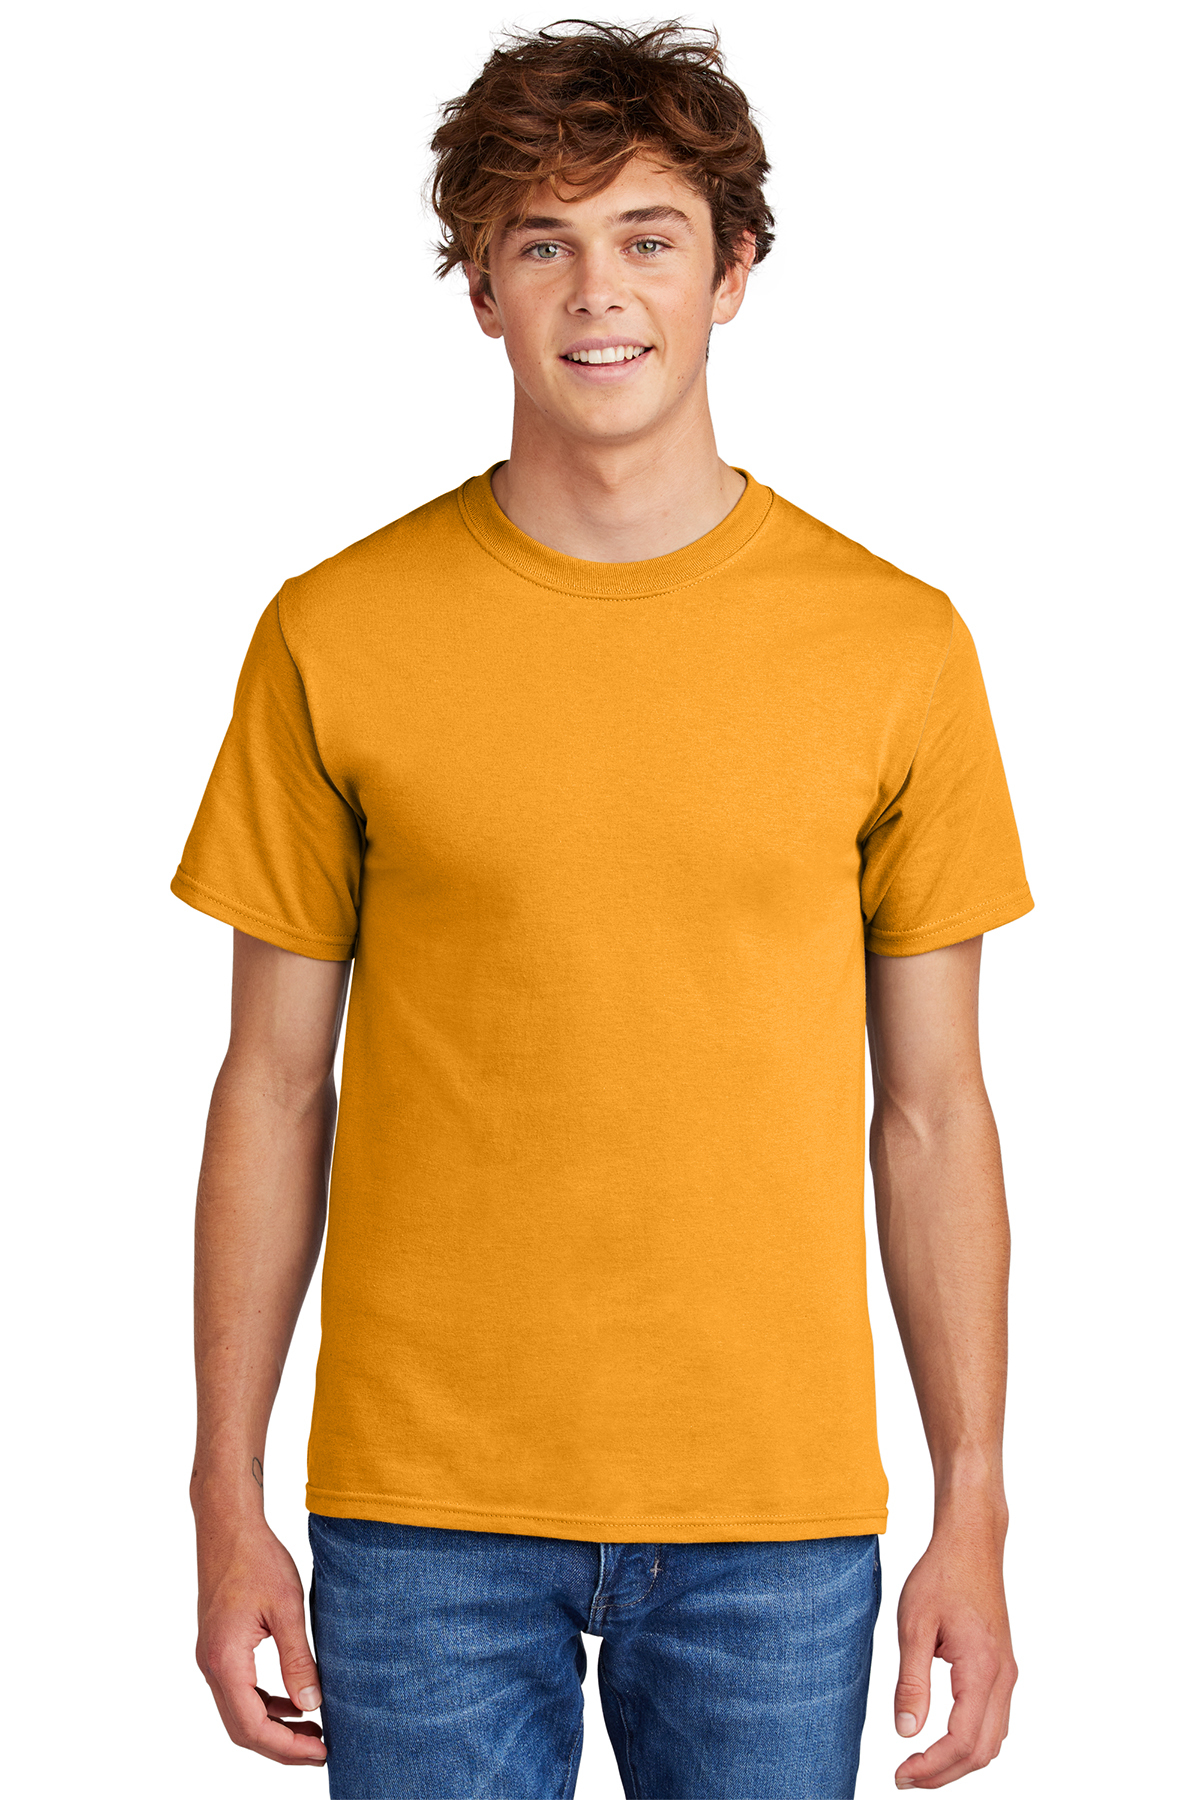 Starburns Essential T-Shirt for Sale by thisoneismine